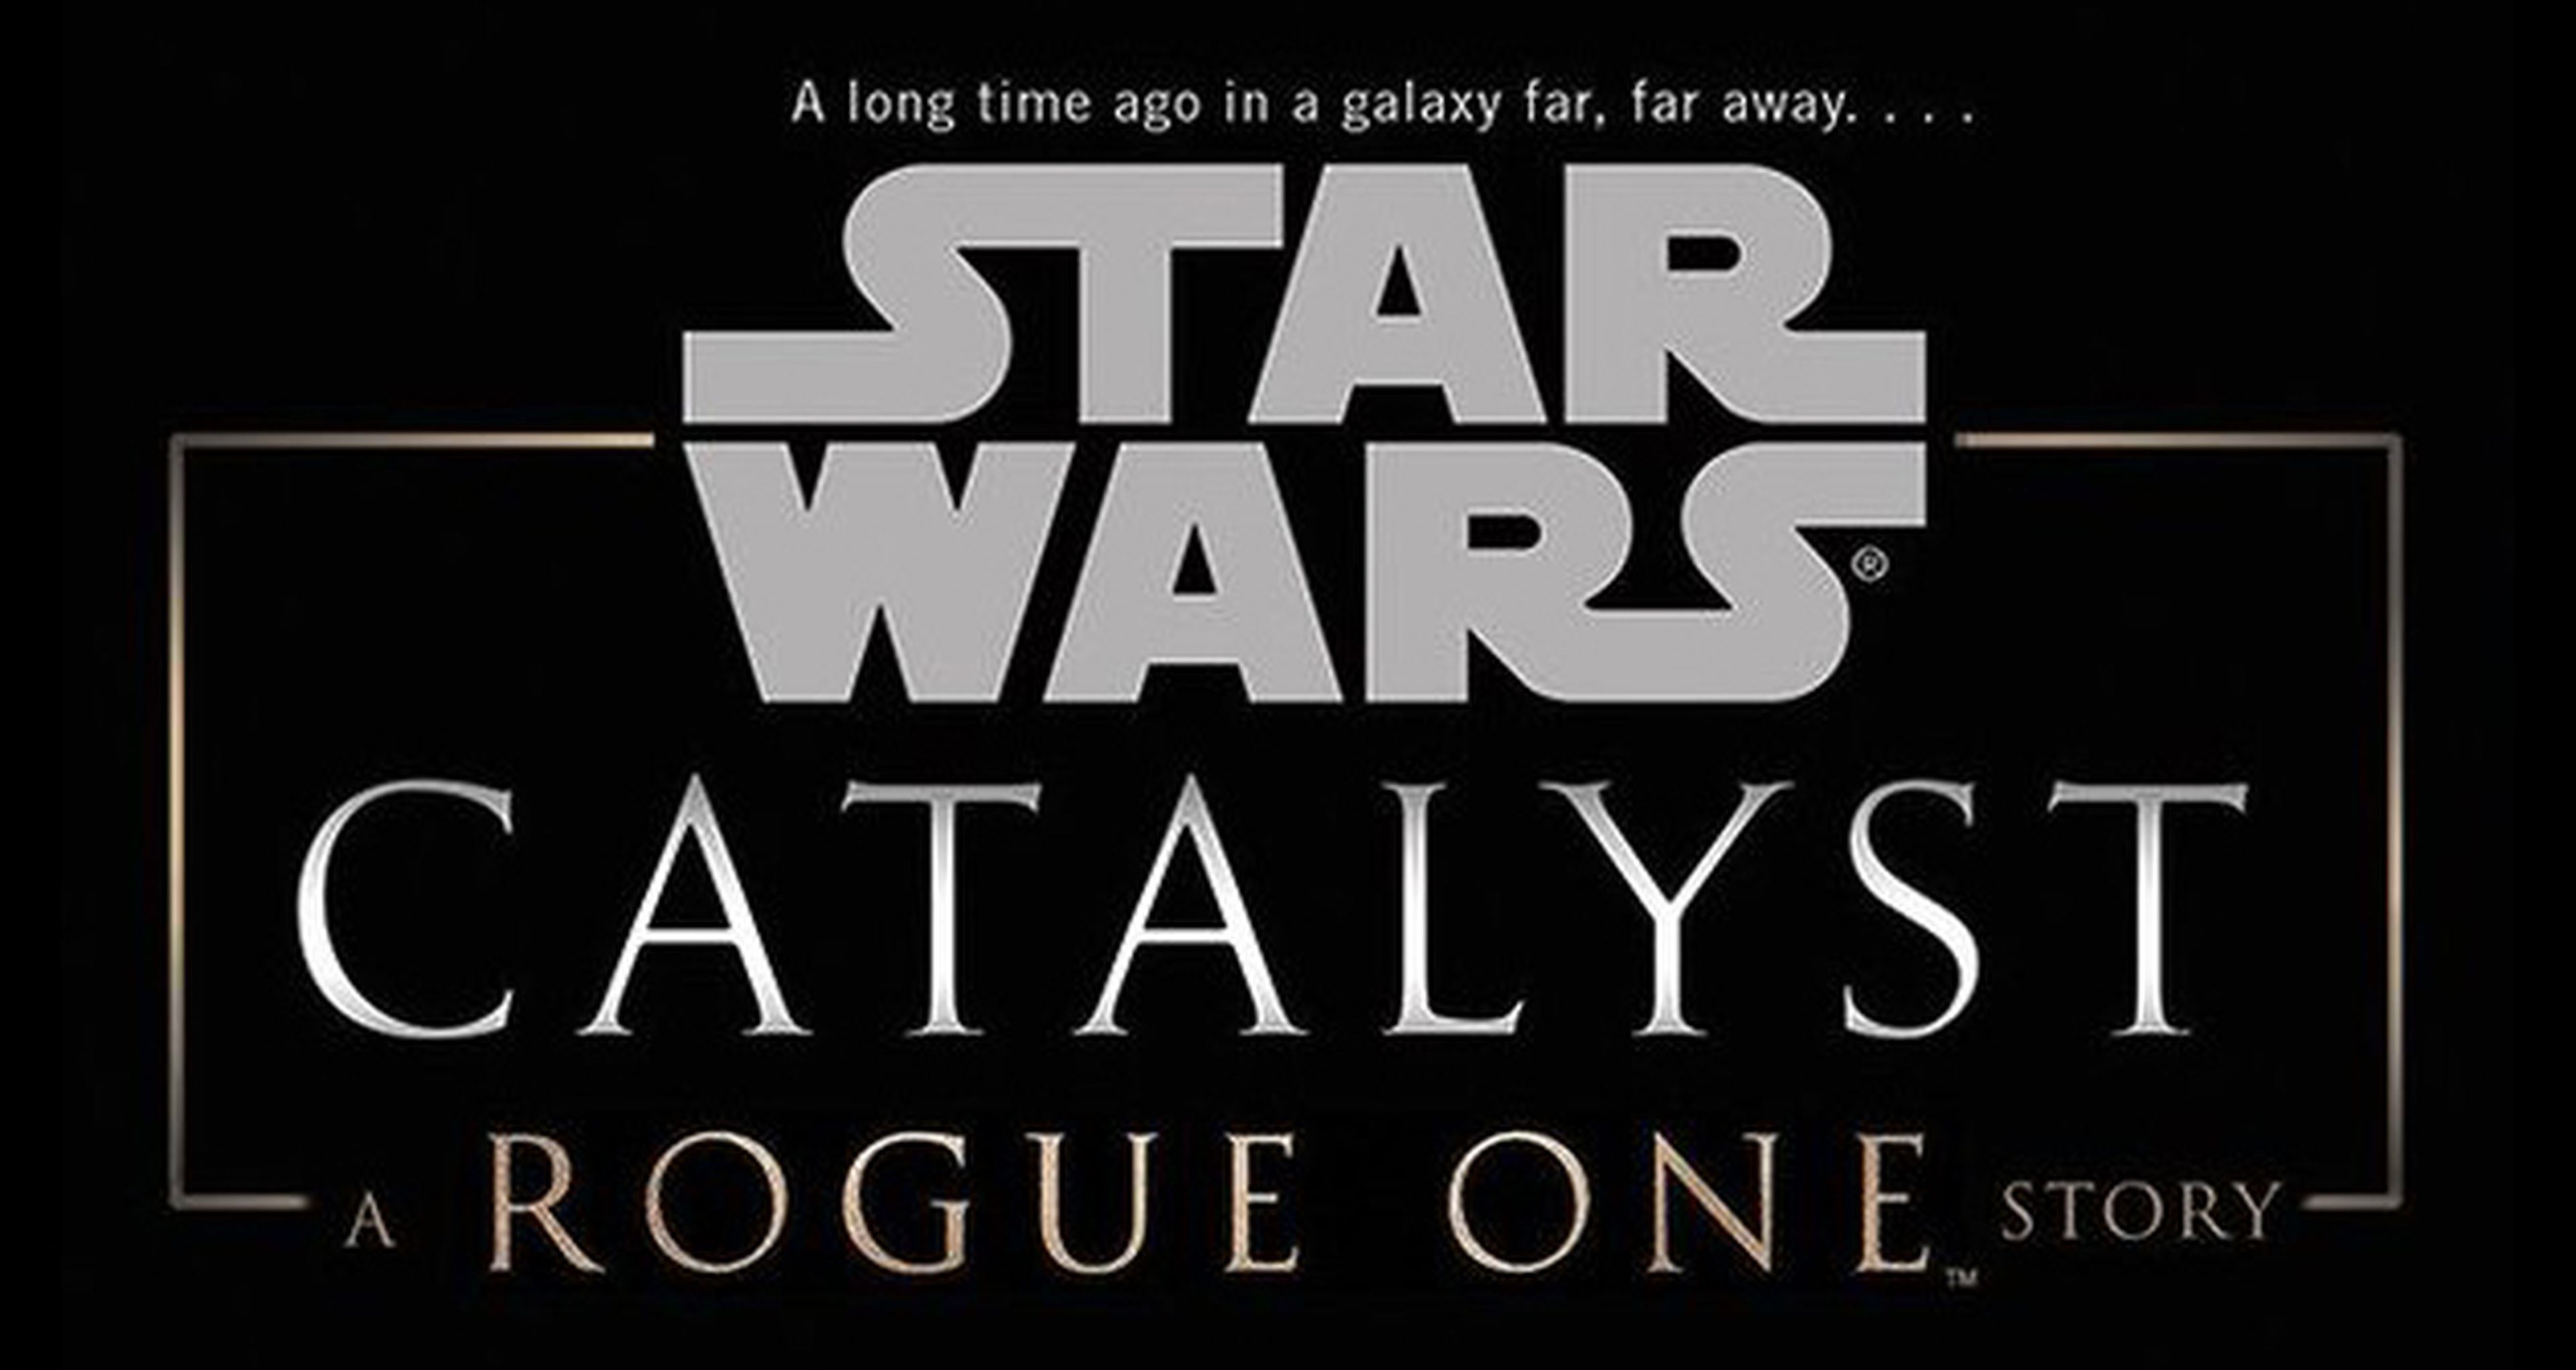 Star Wars - Rogue One. El spin off tendra serie de cómics y novela (Actualizado)